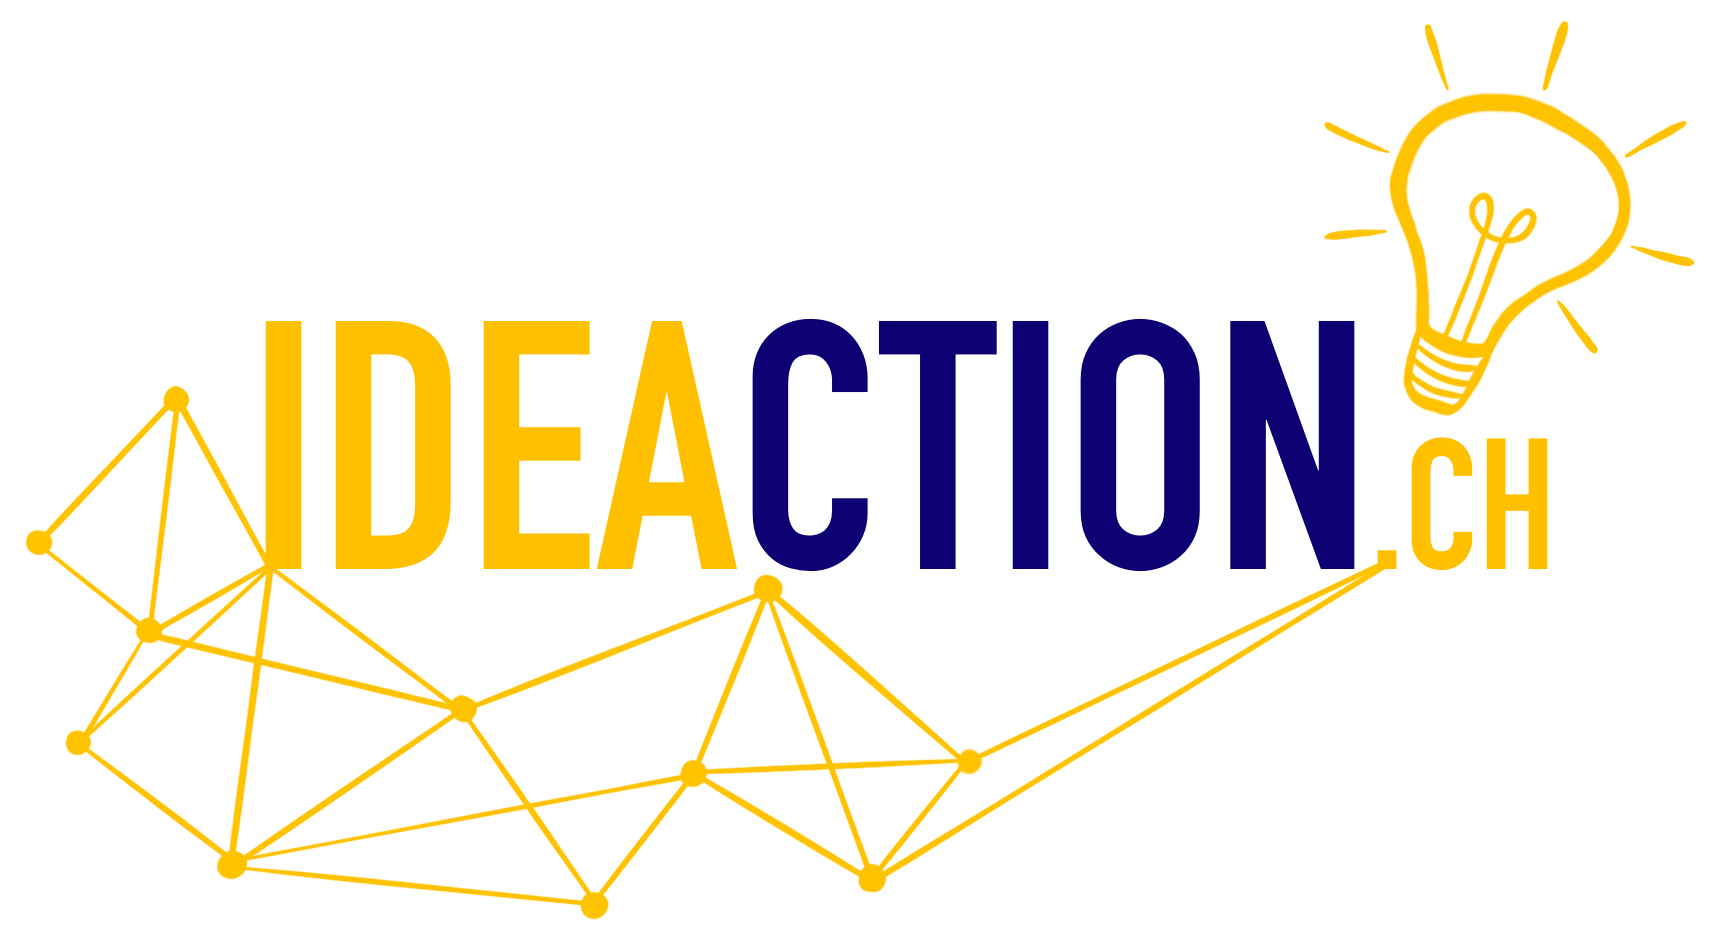 Logo of Ideaction